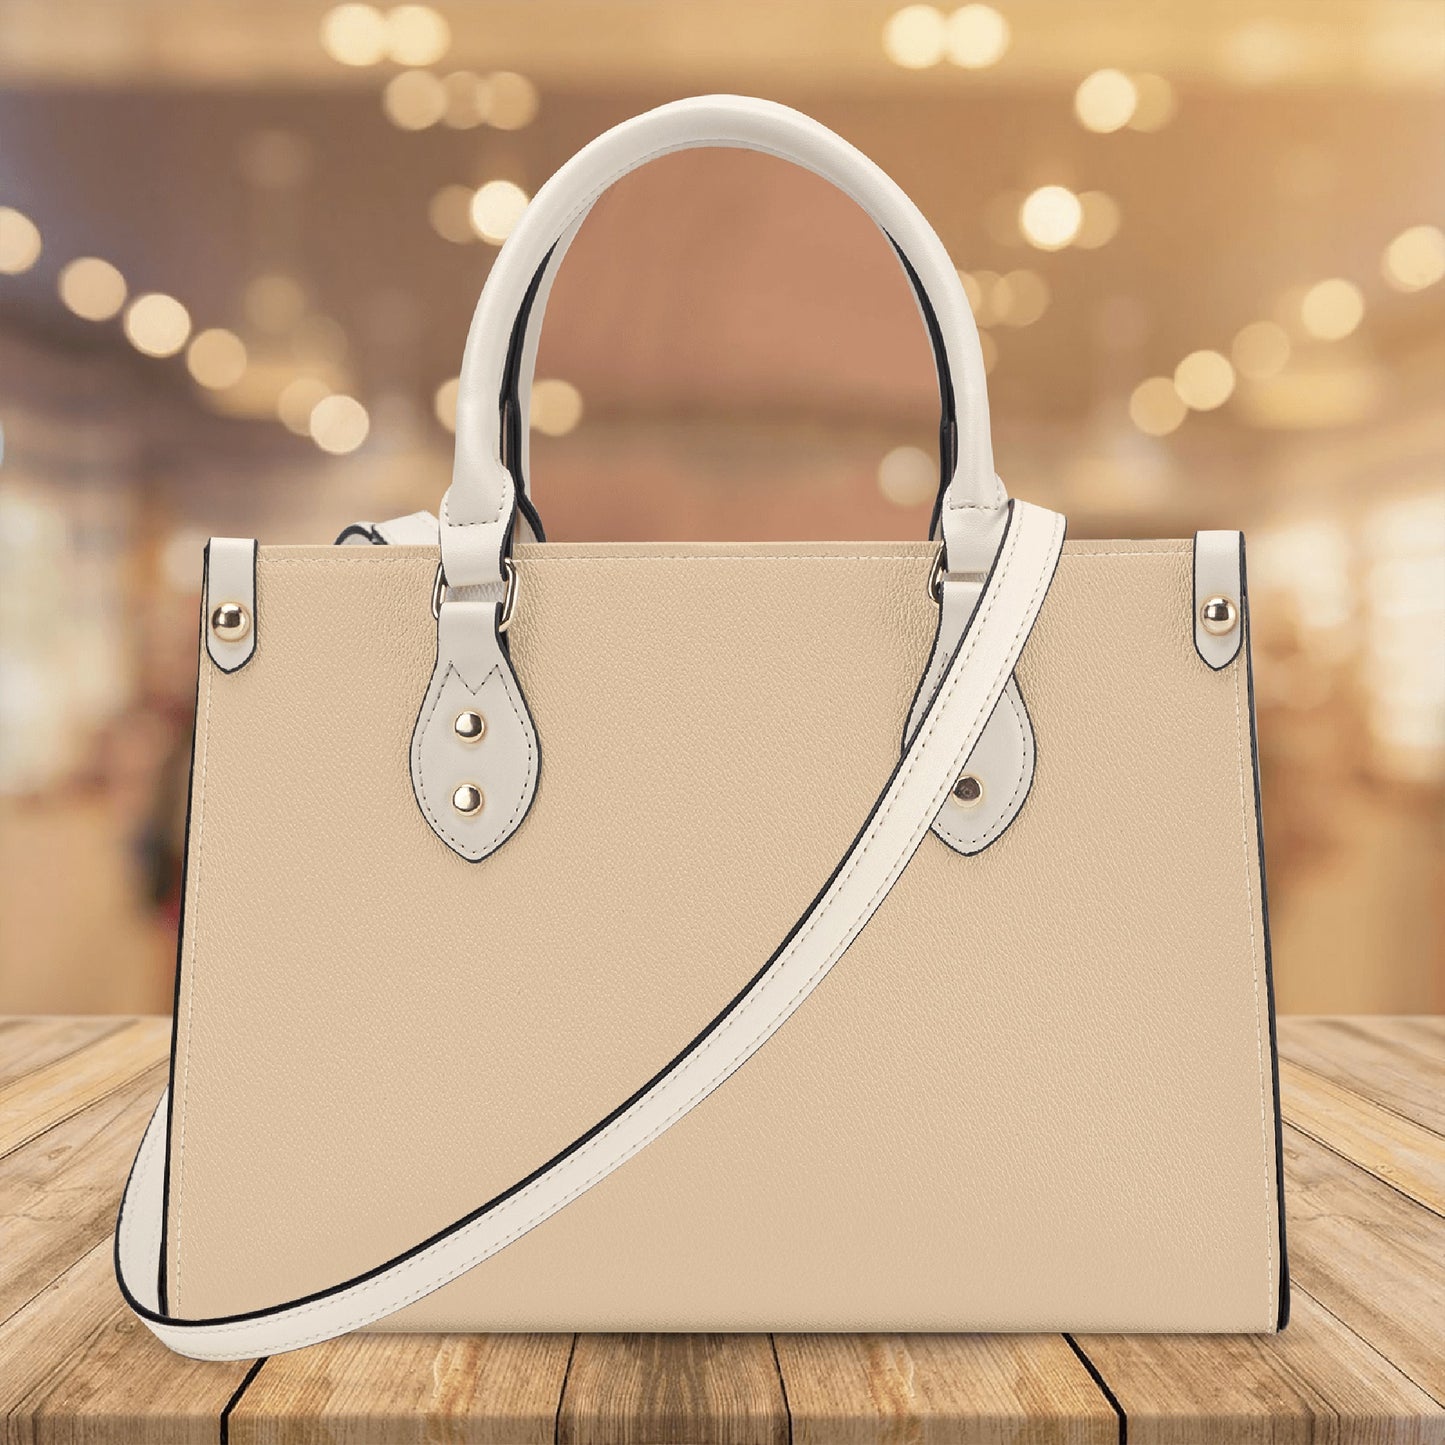 Piper - Luxury Women Handbag